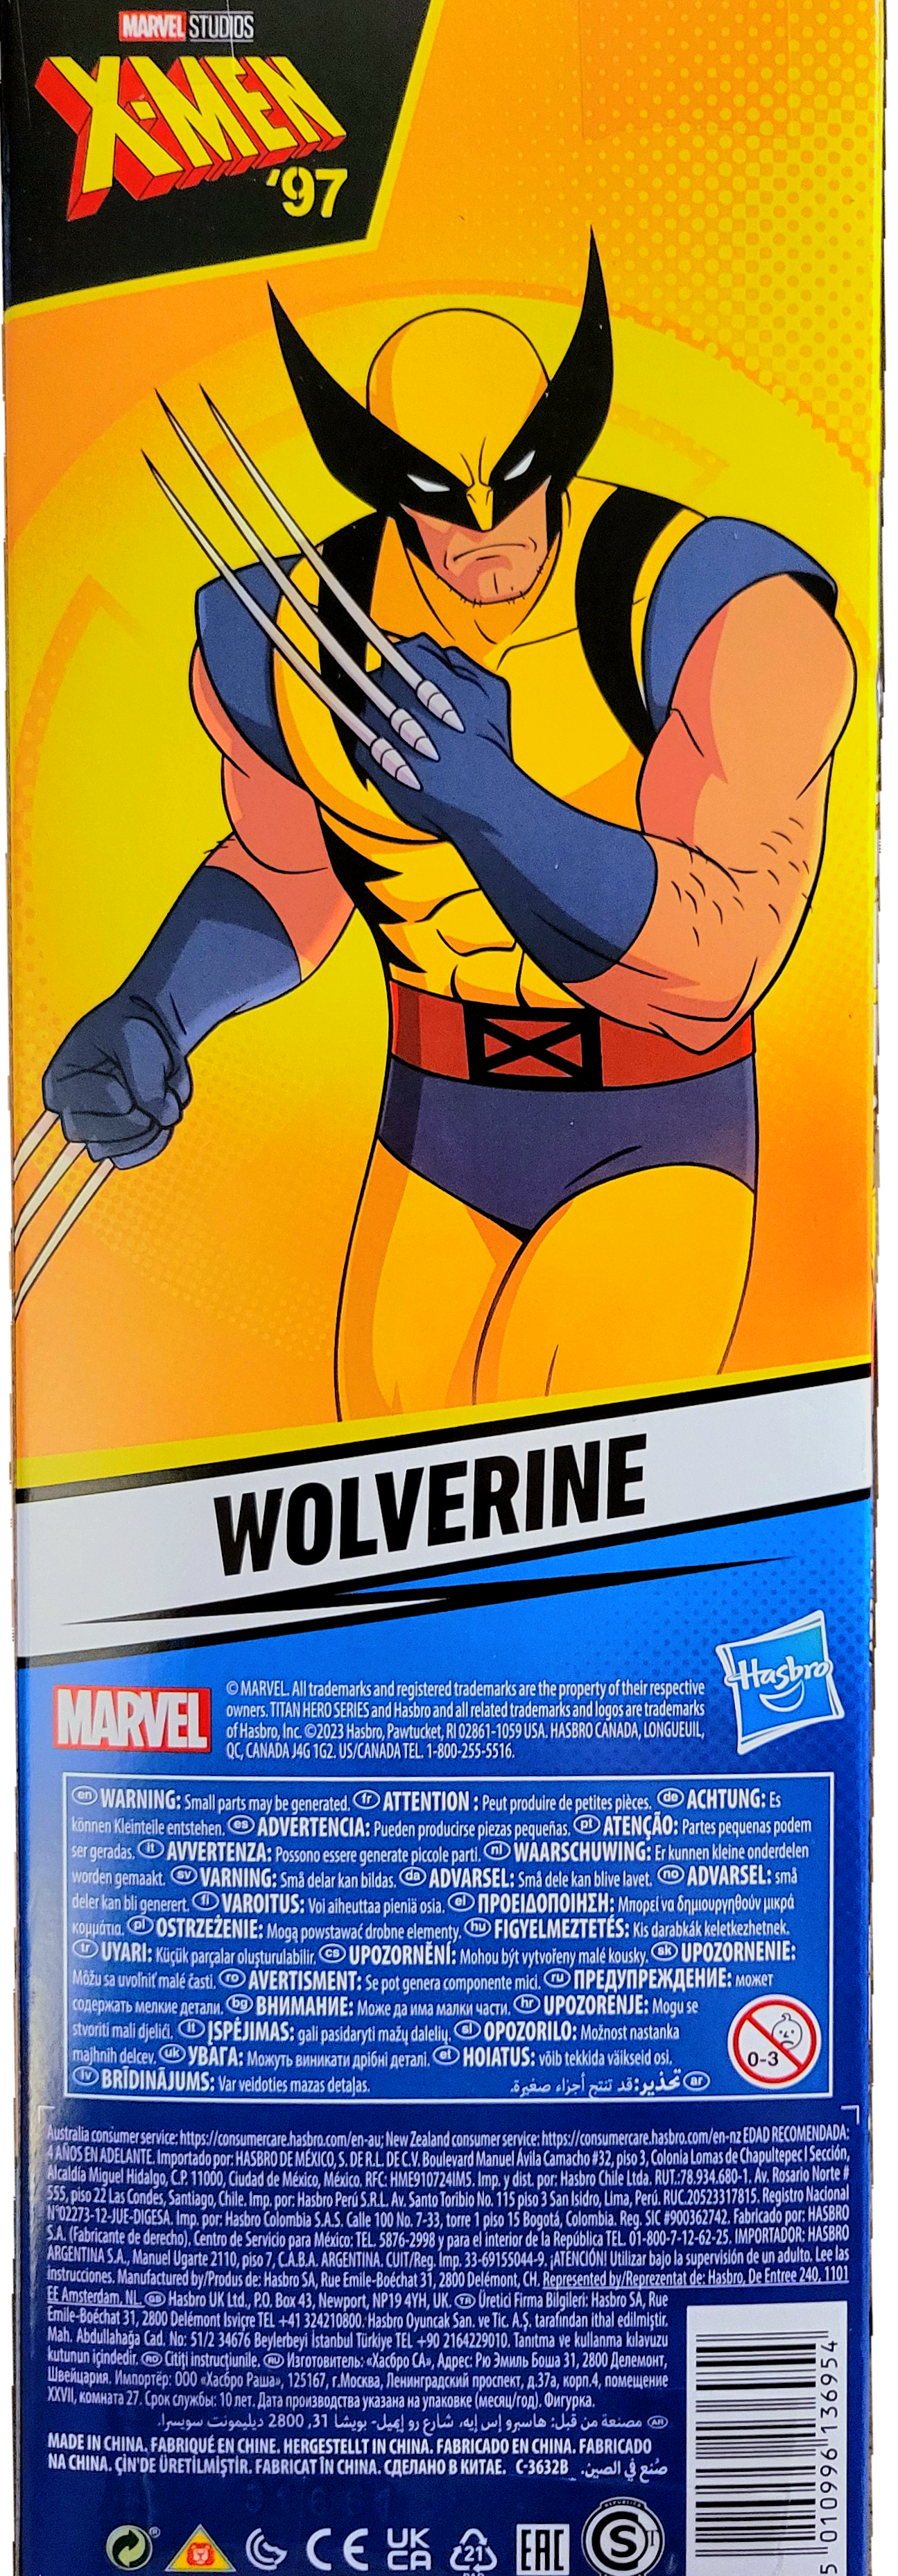 Hasbro Marvel Studios X-Men '97 Wolverine Titan Hero Series Action Figure